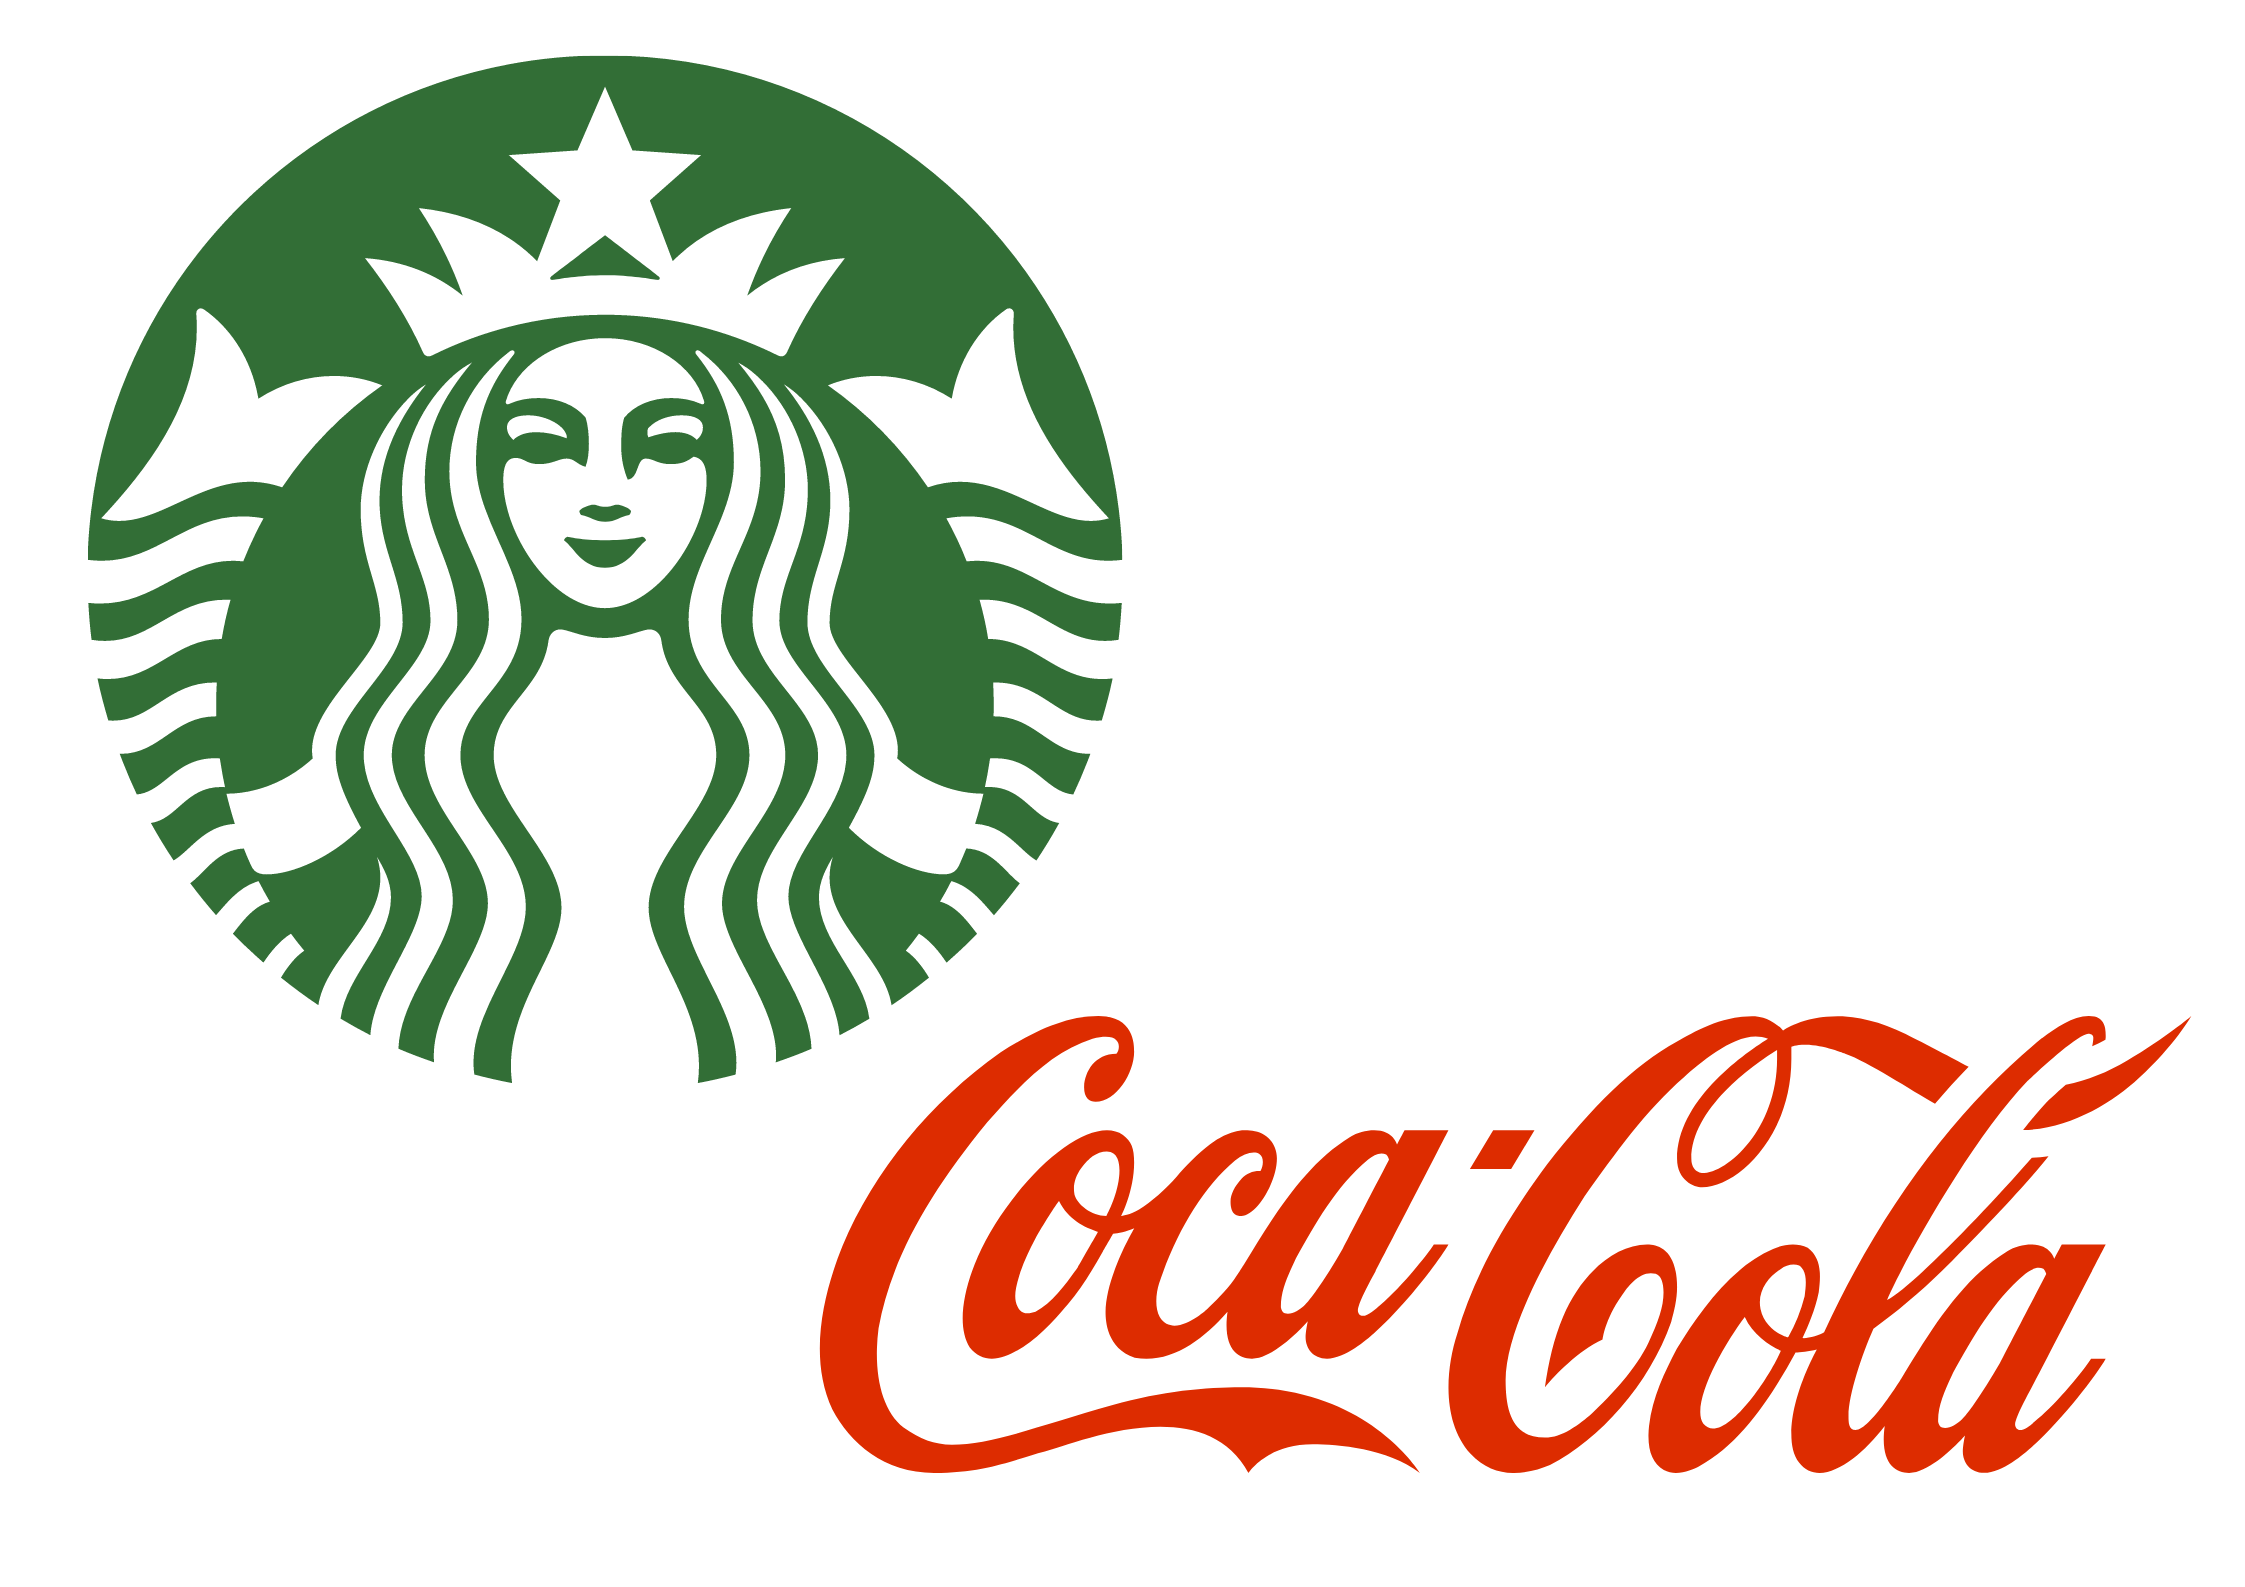 starbucks and coca cola: strong branding